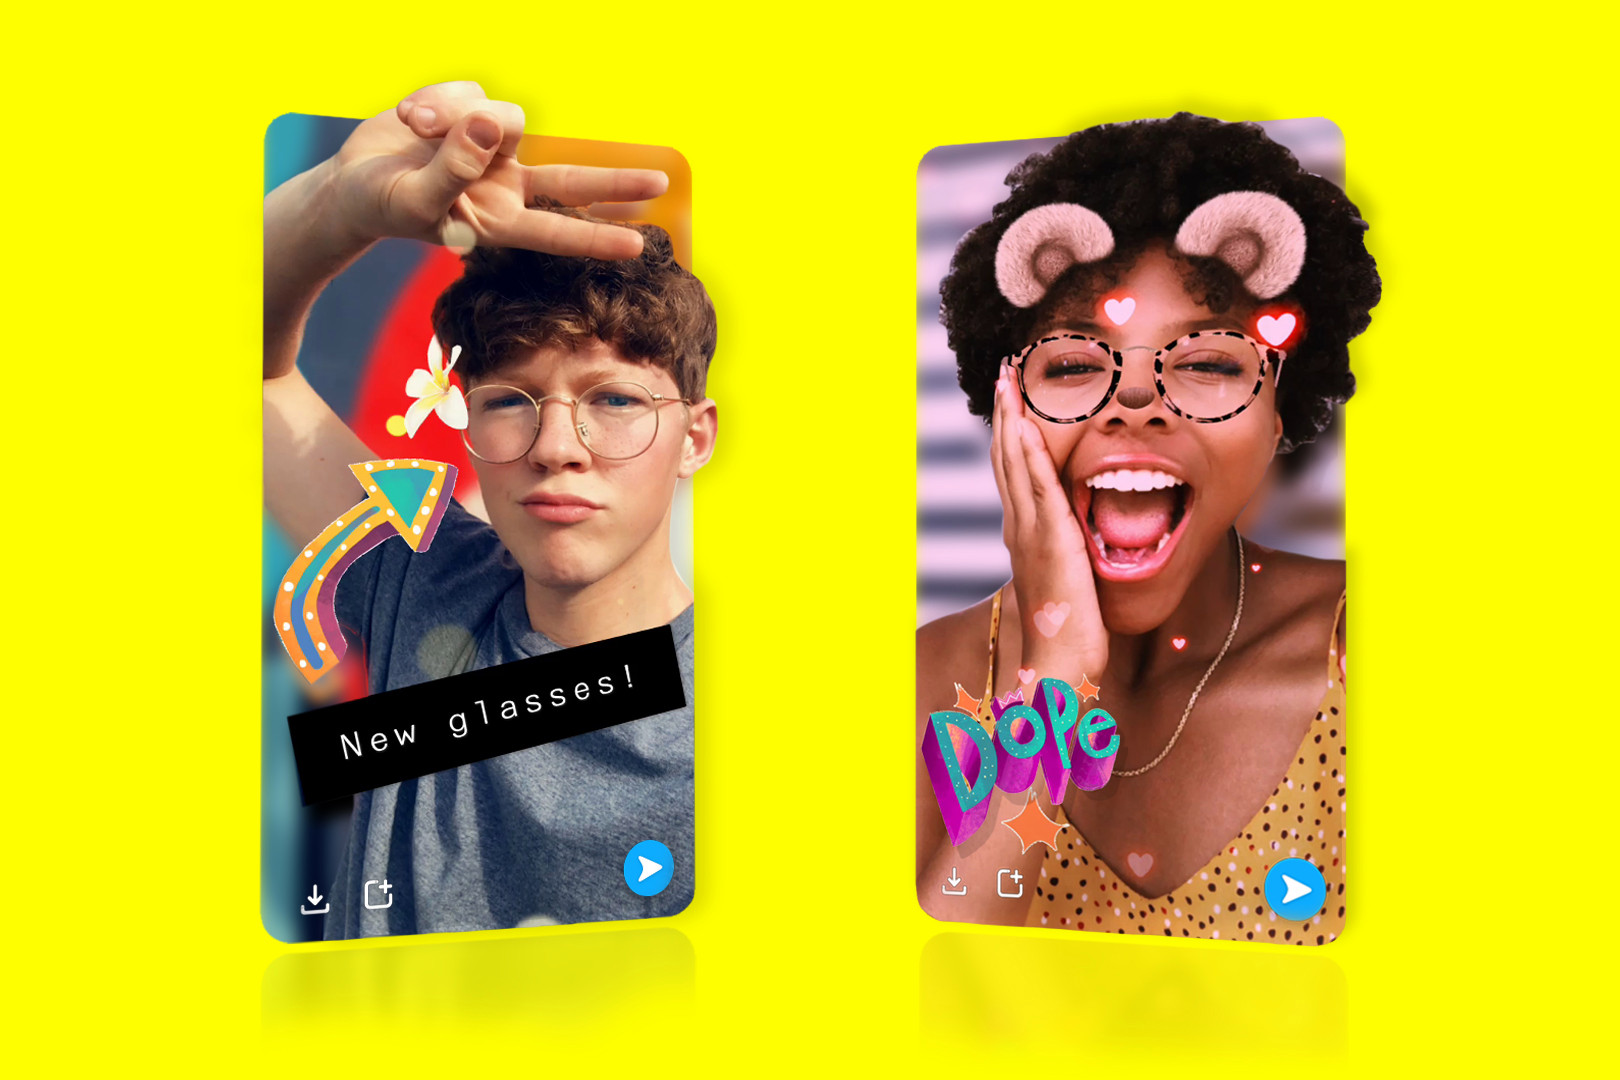  Swafoto 3D baru Snapchat dapat dilihat dari berbagai sudut